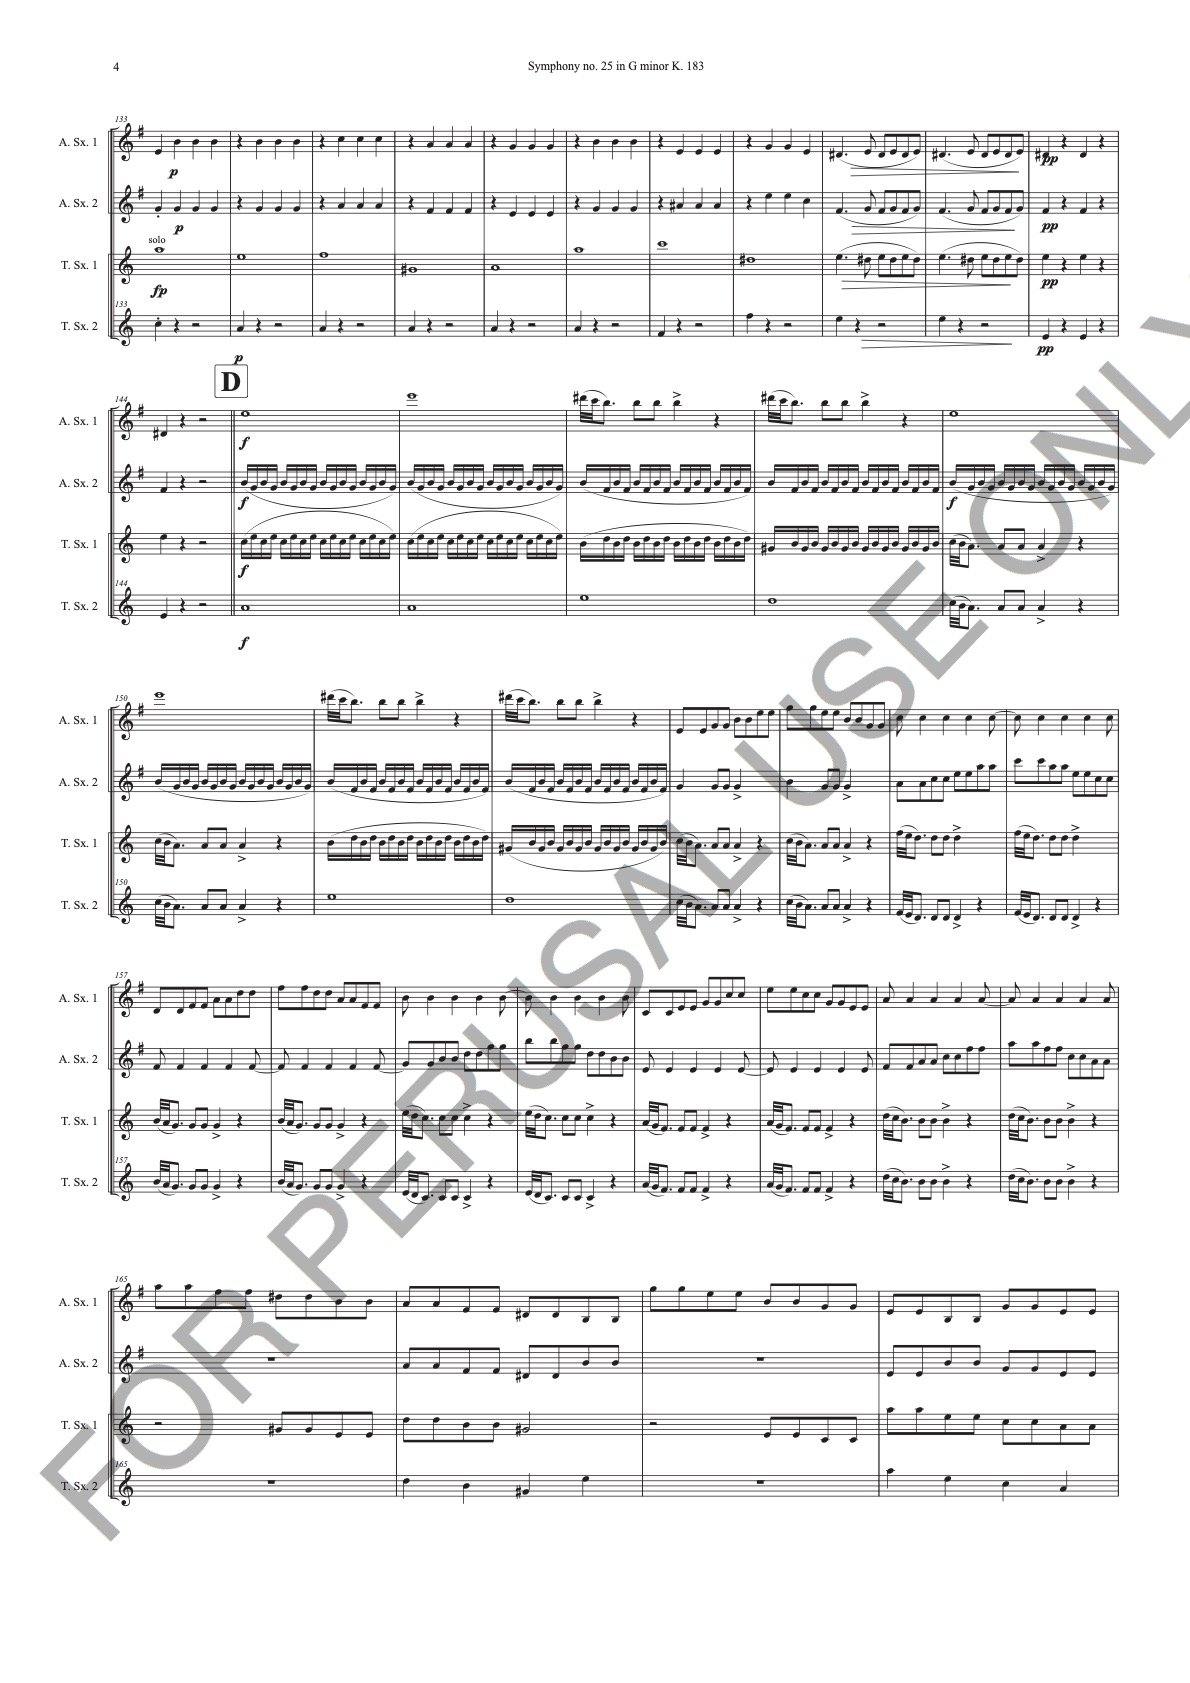 Saxophone Quartet sheet music (AATT): Mozart's Symphony no. 25 in G minor - ChaipruckMekara